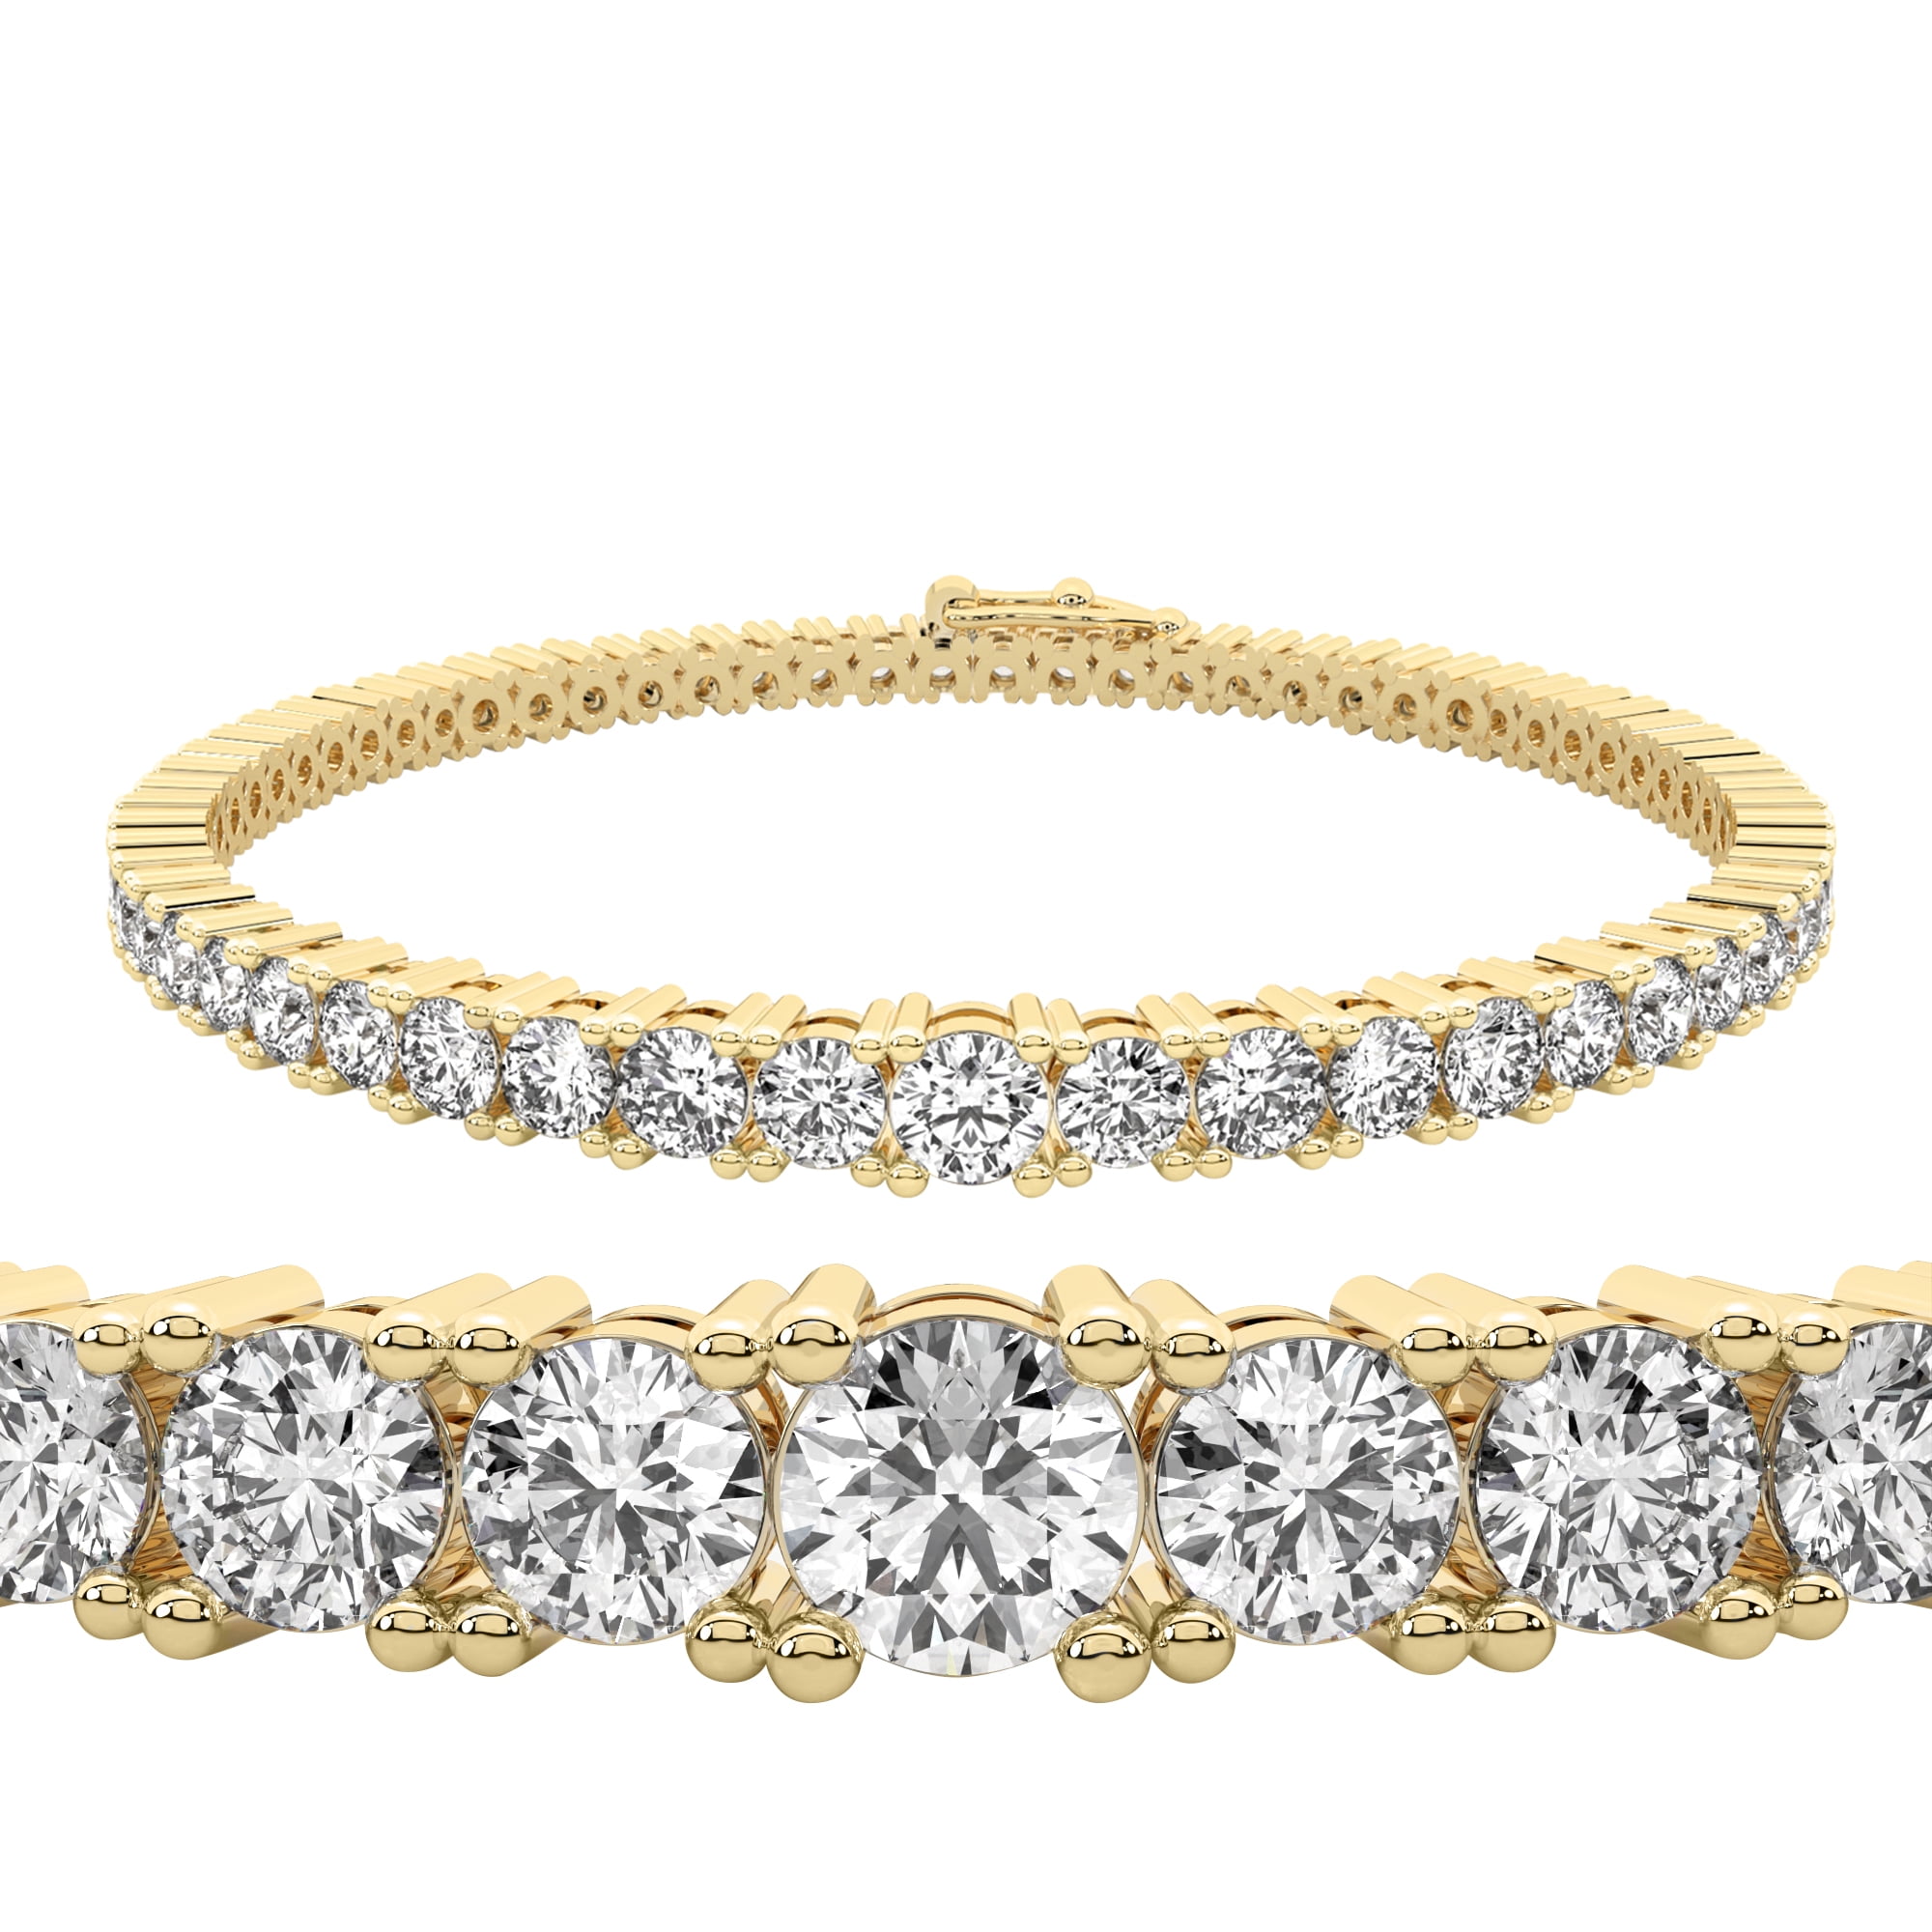 7 ct black diamond bracelet in gold/platinum agbrl-1033